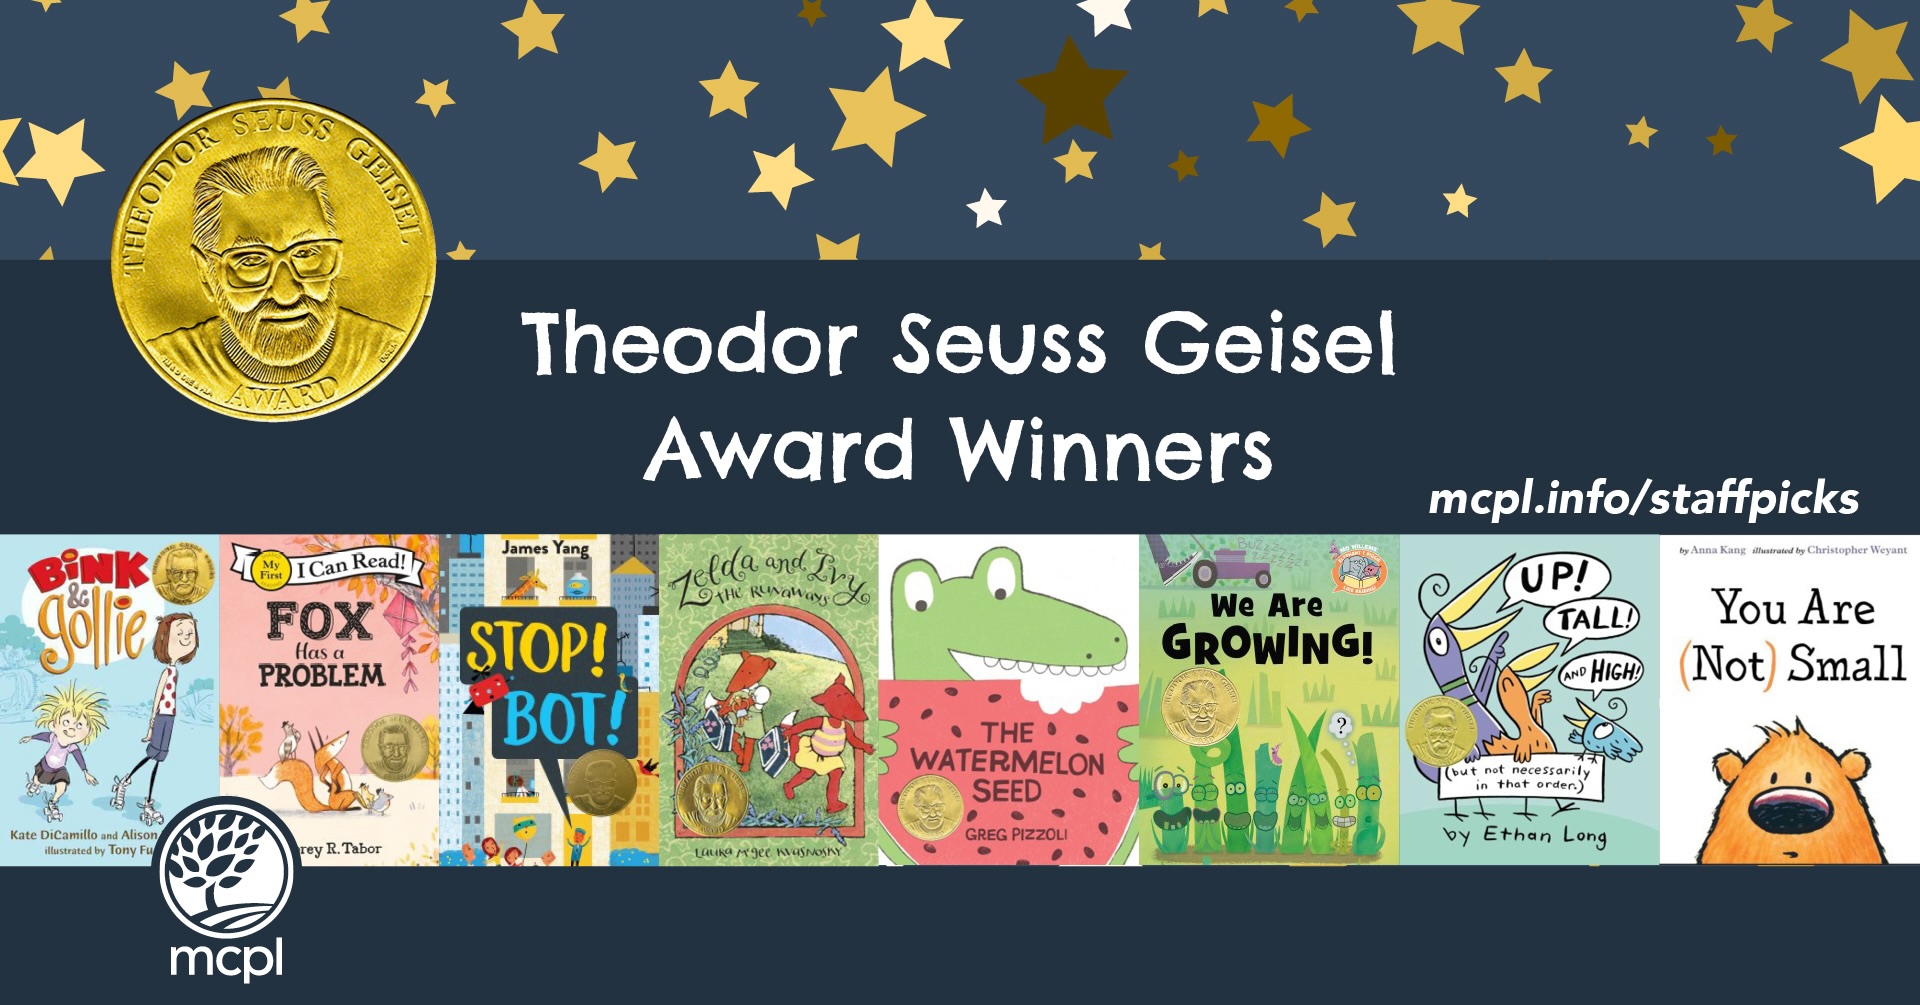 Theodor Seuss Geisel Award Winners